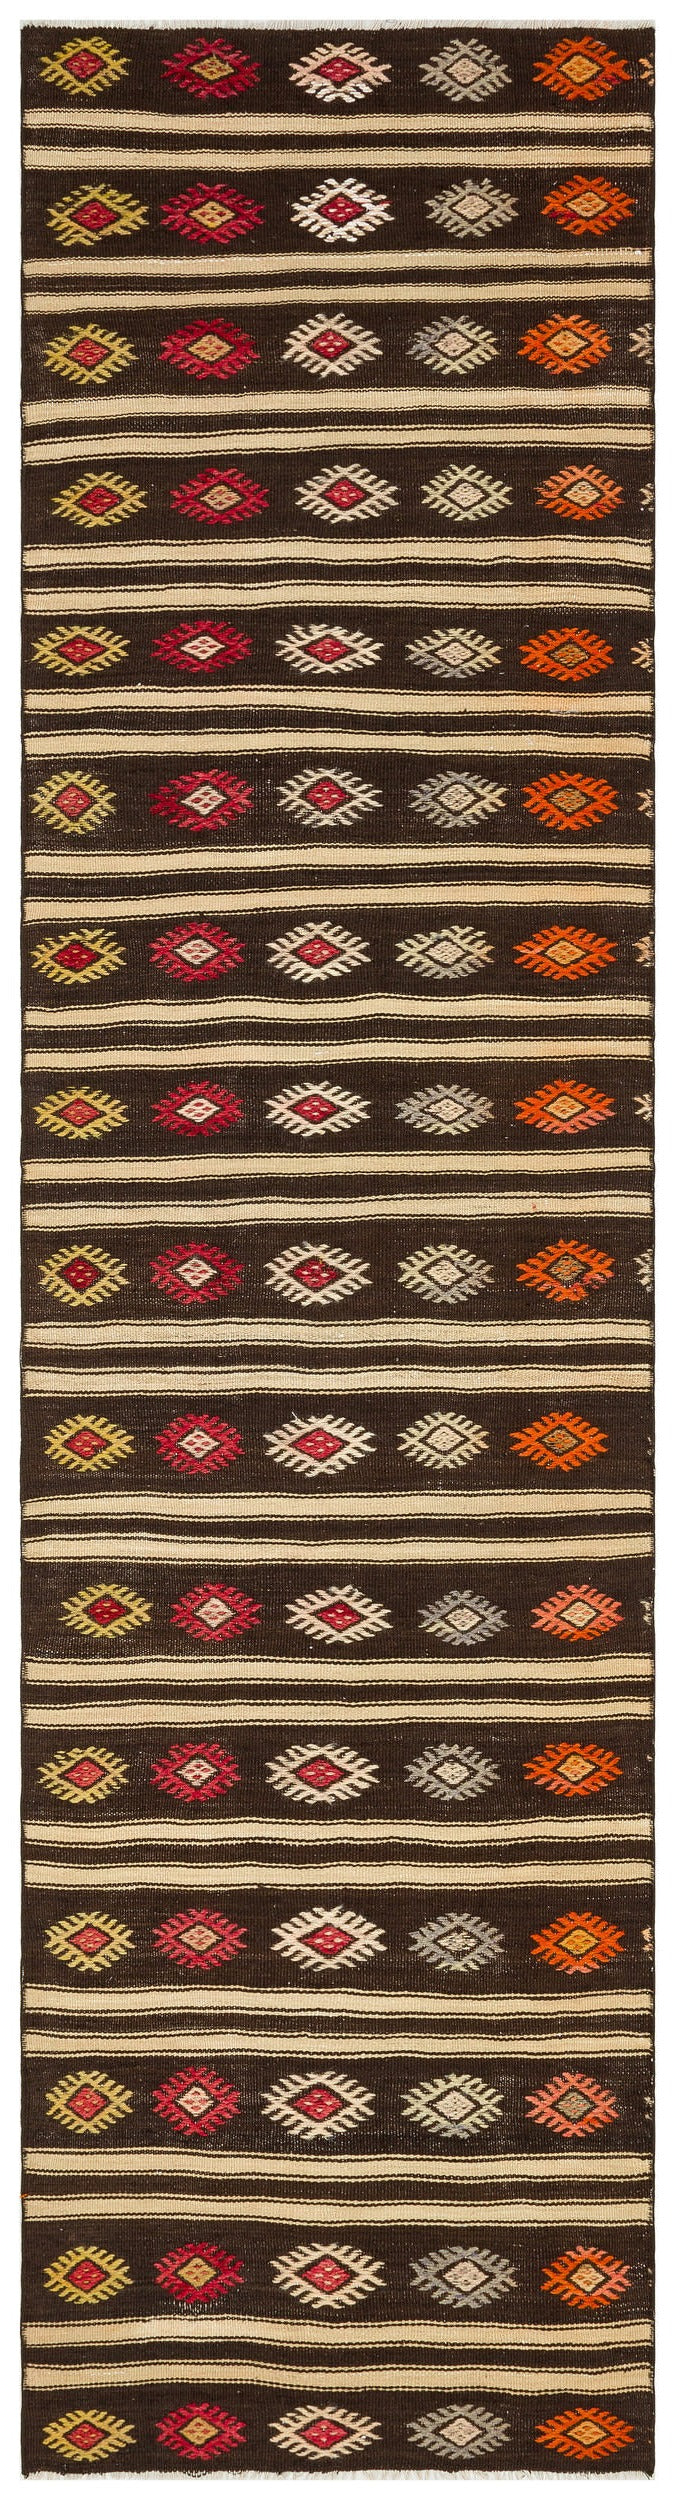 Cretan Multi Striped Wool Hand Woven Carpet 076 x 312